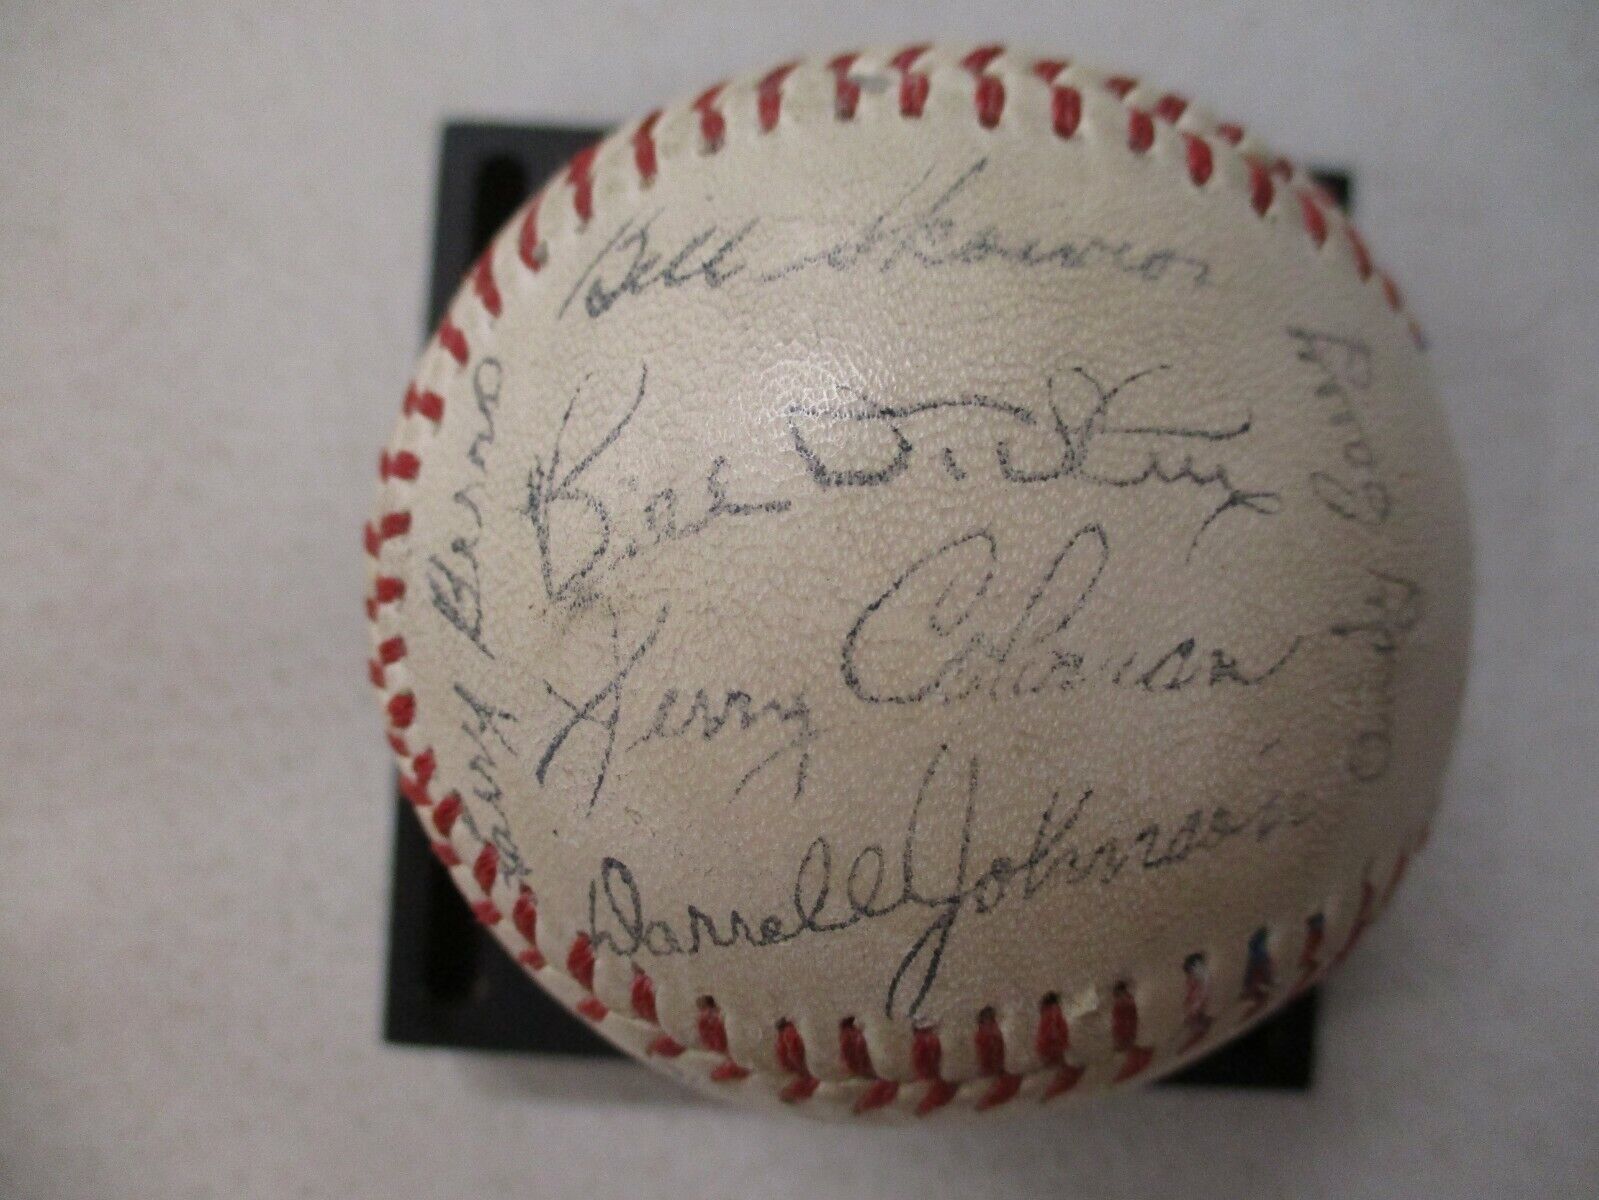 1950's New York Yankees Stadium Baseball Facsimile Stamped Stengel Mantle Dickey